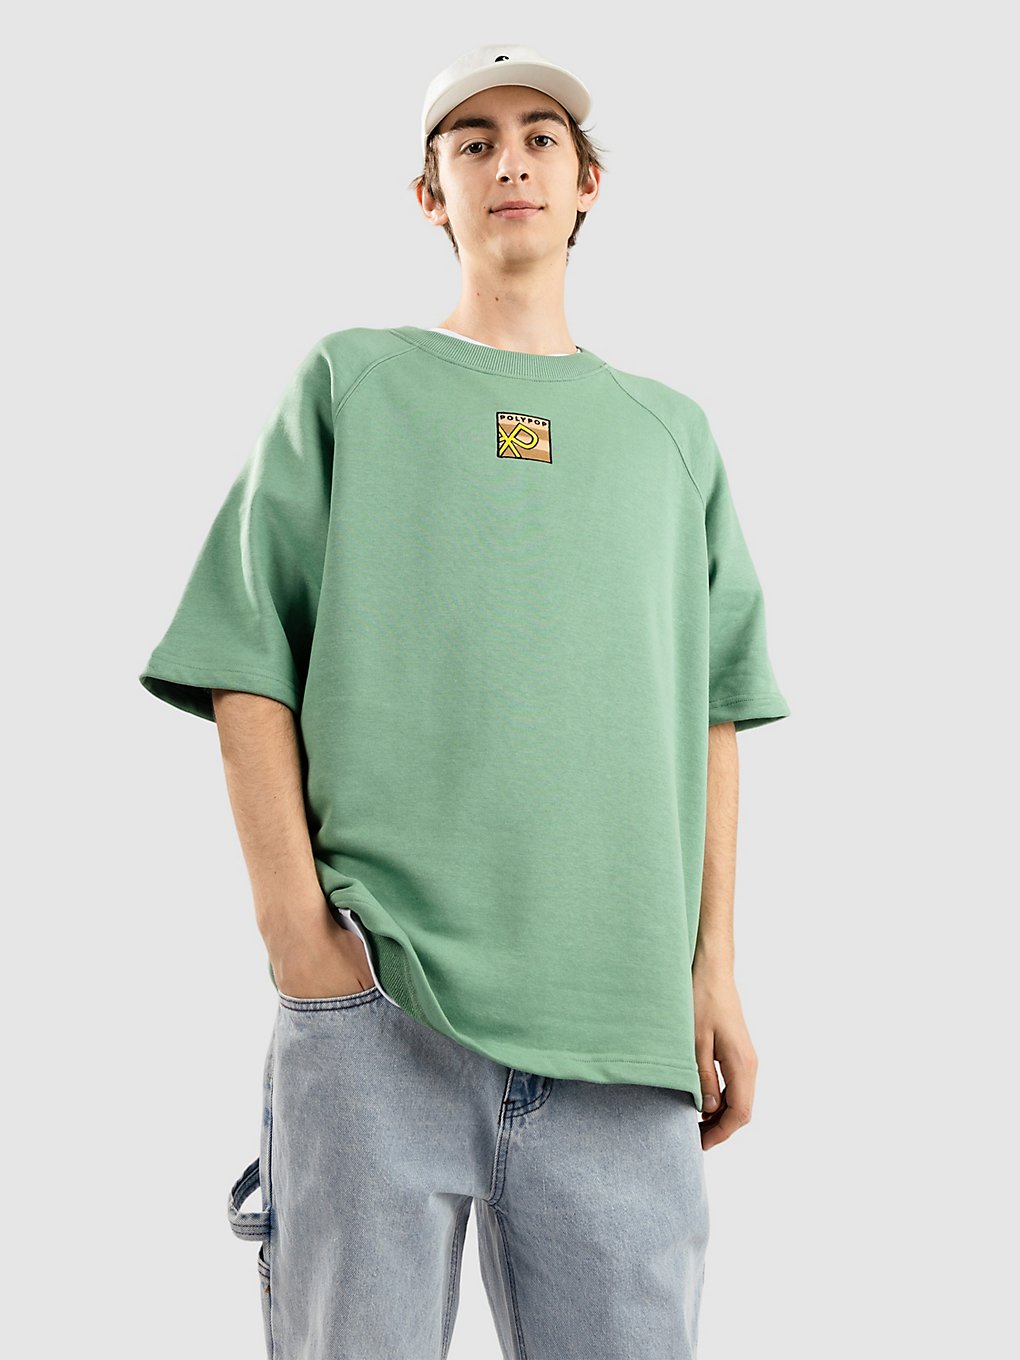 Polypop Square Logo Oversized Fit Heavy T-Shirt groen